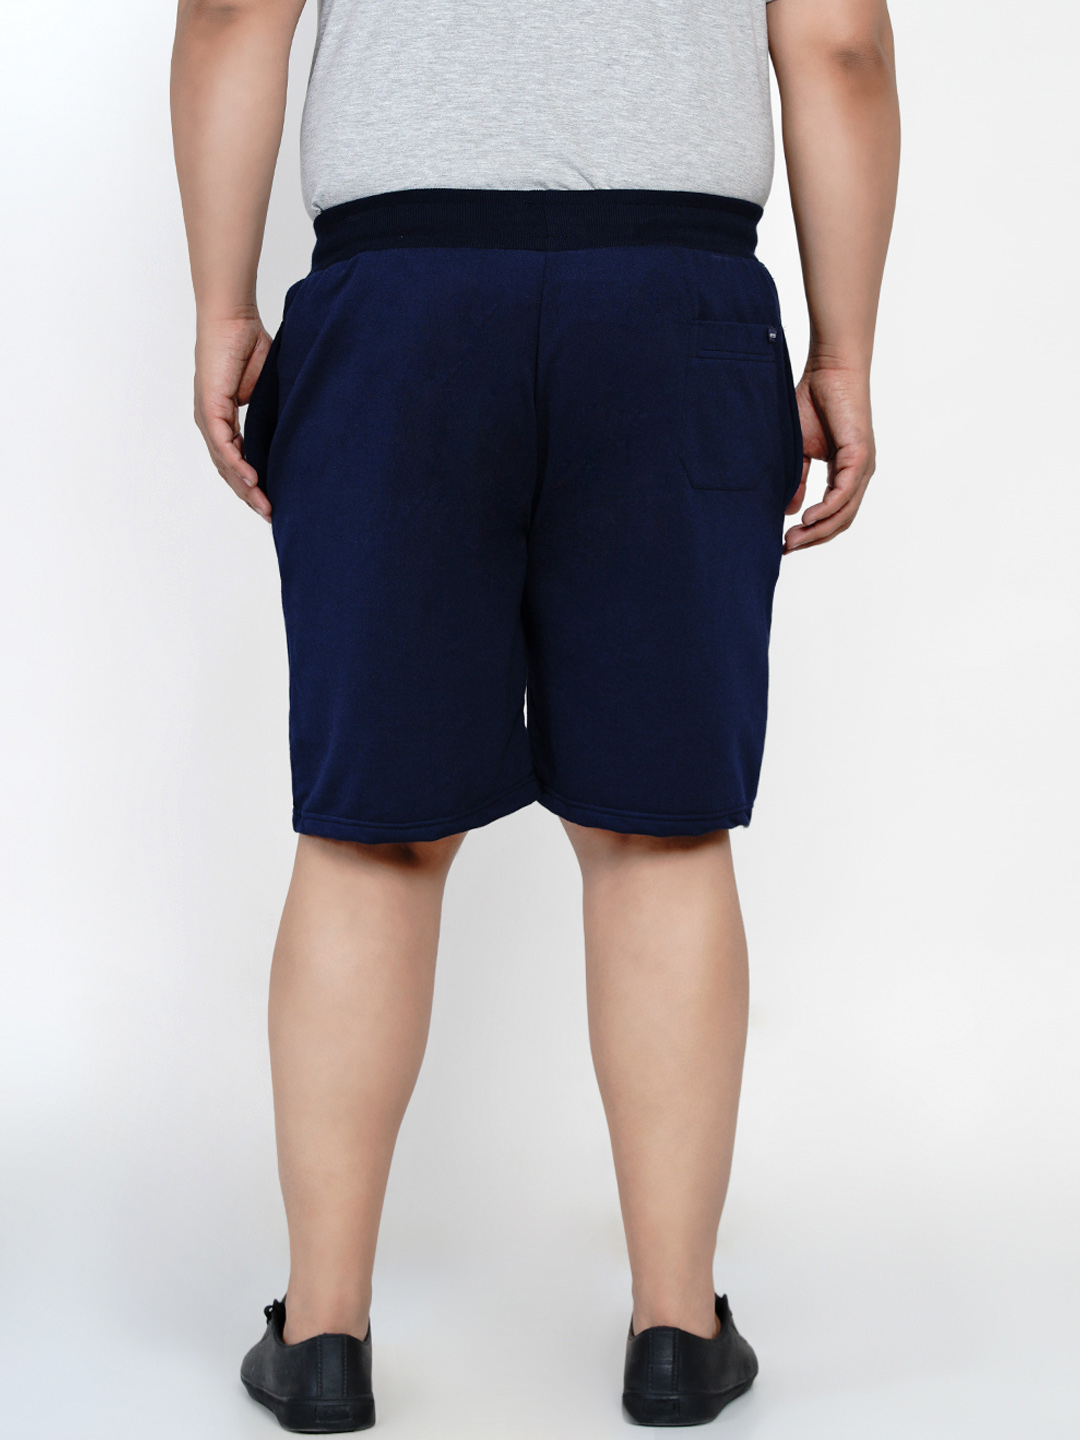 bottomwear/caprishorts/JPSOK1301C/jpsok1301c-5.jpg